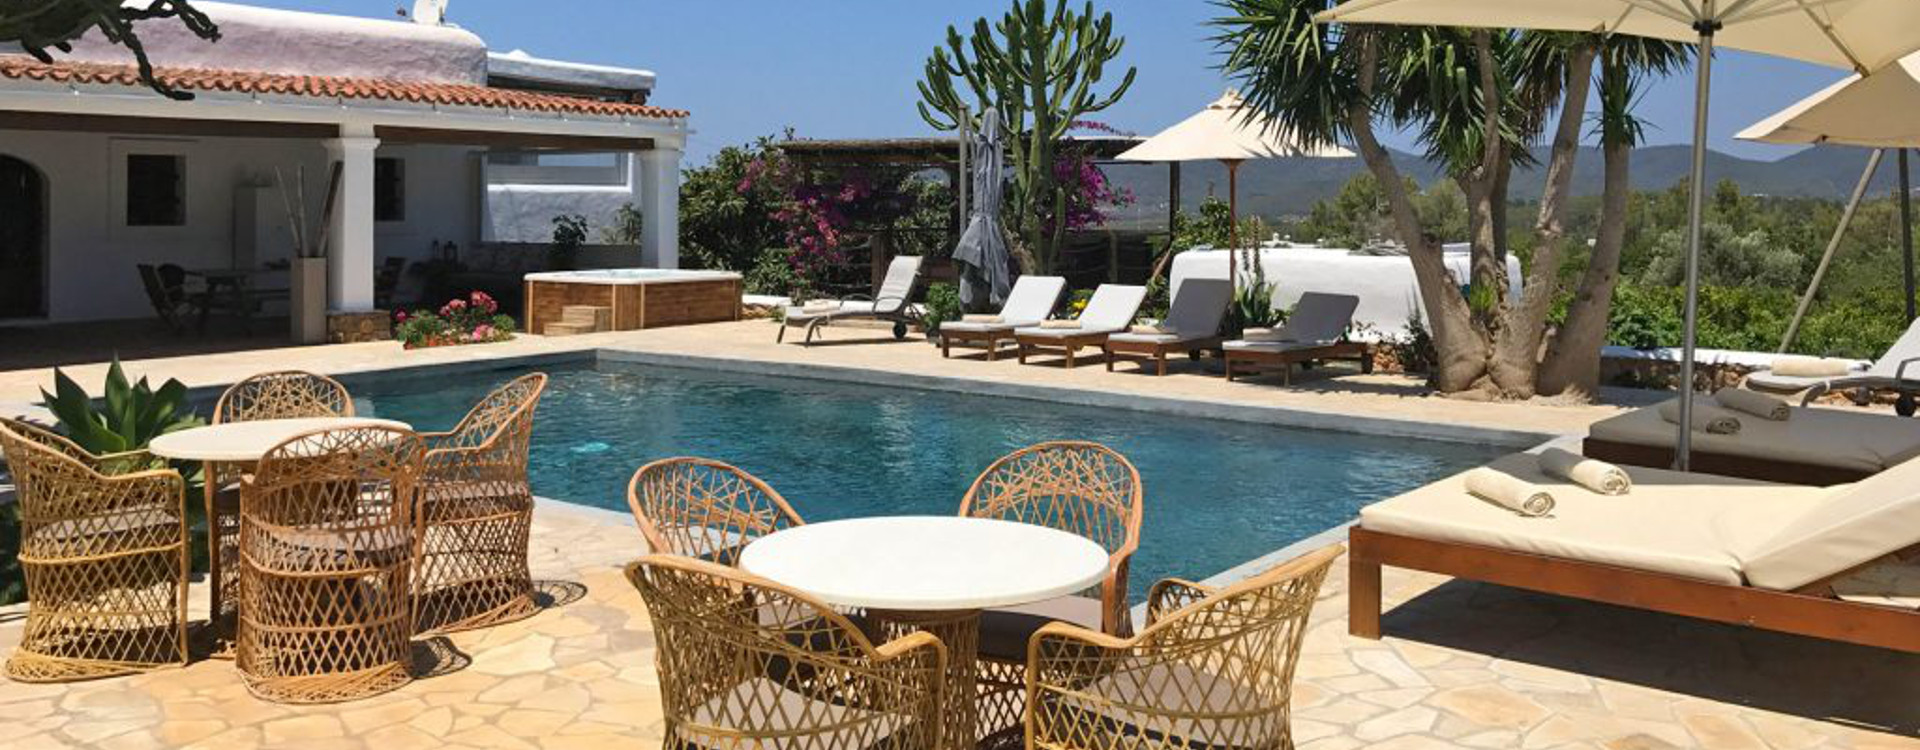 villa garden and swimming pool